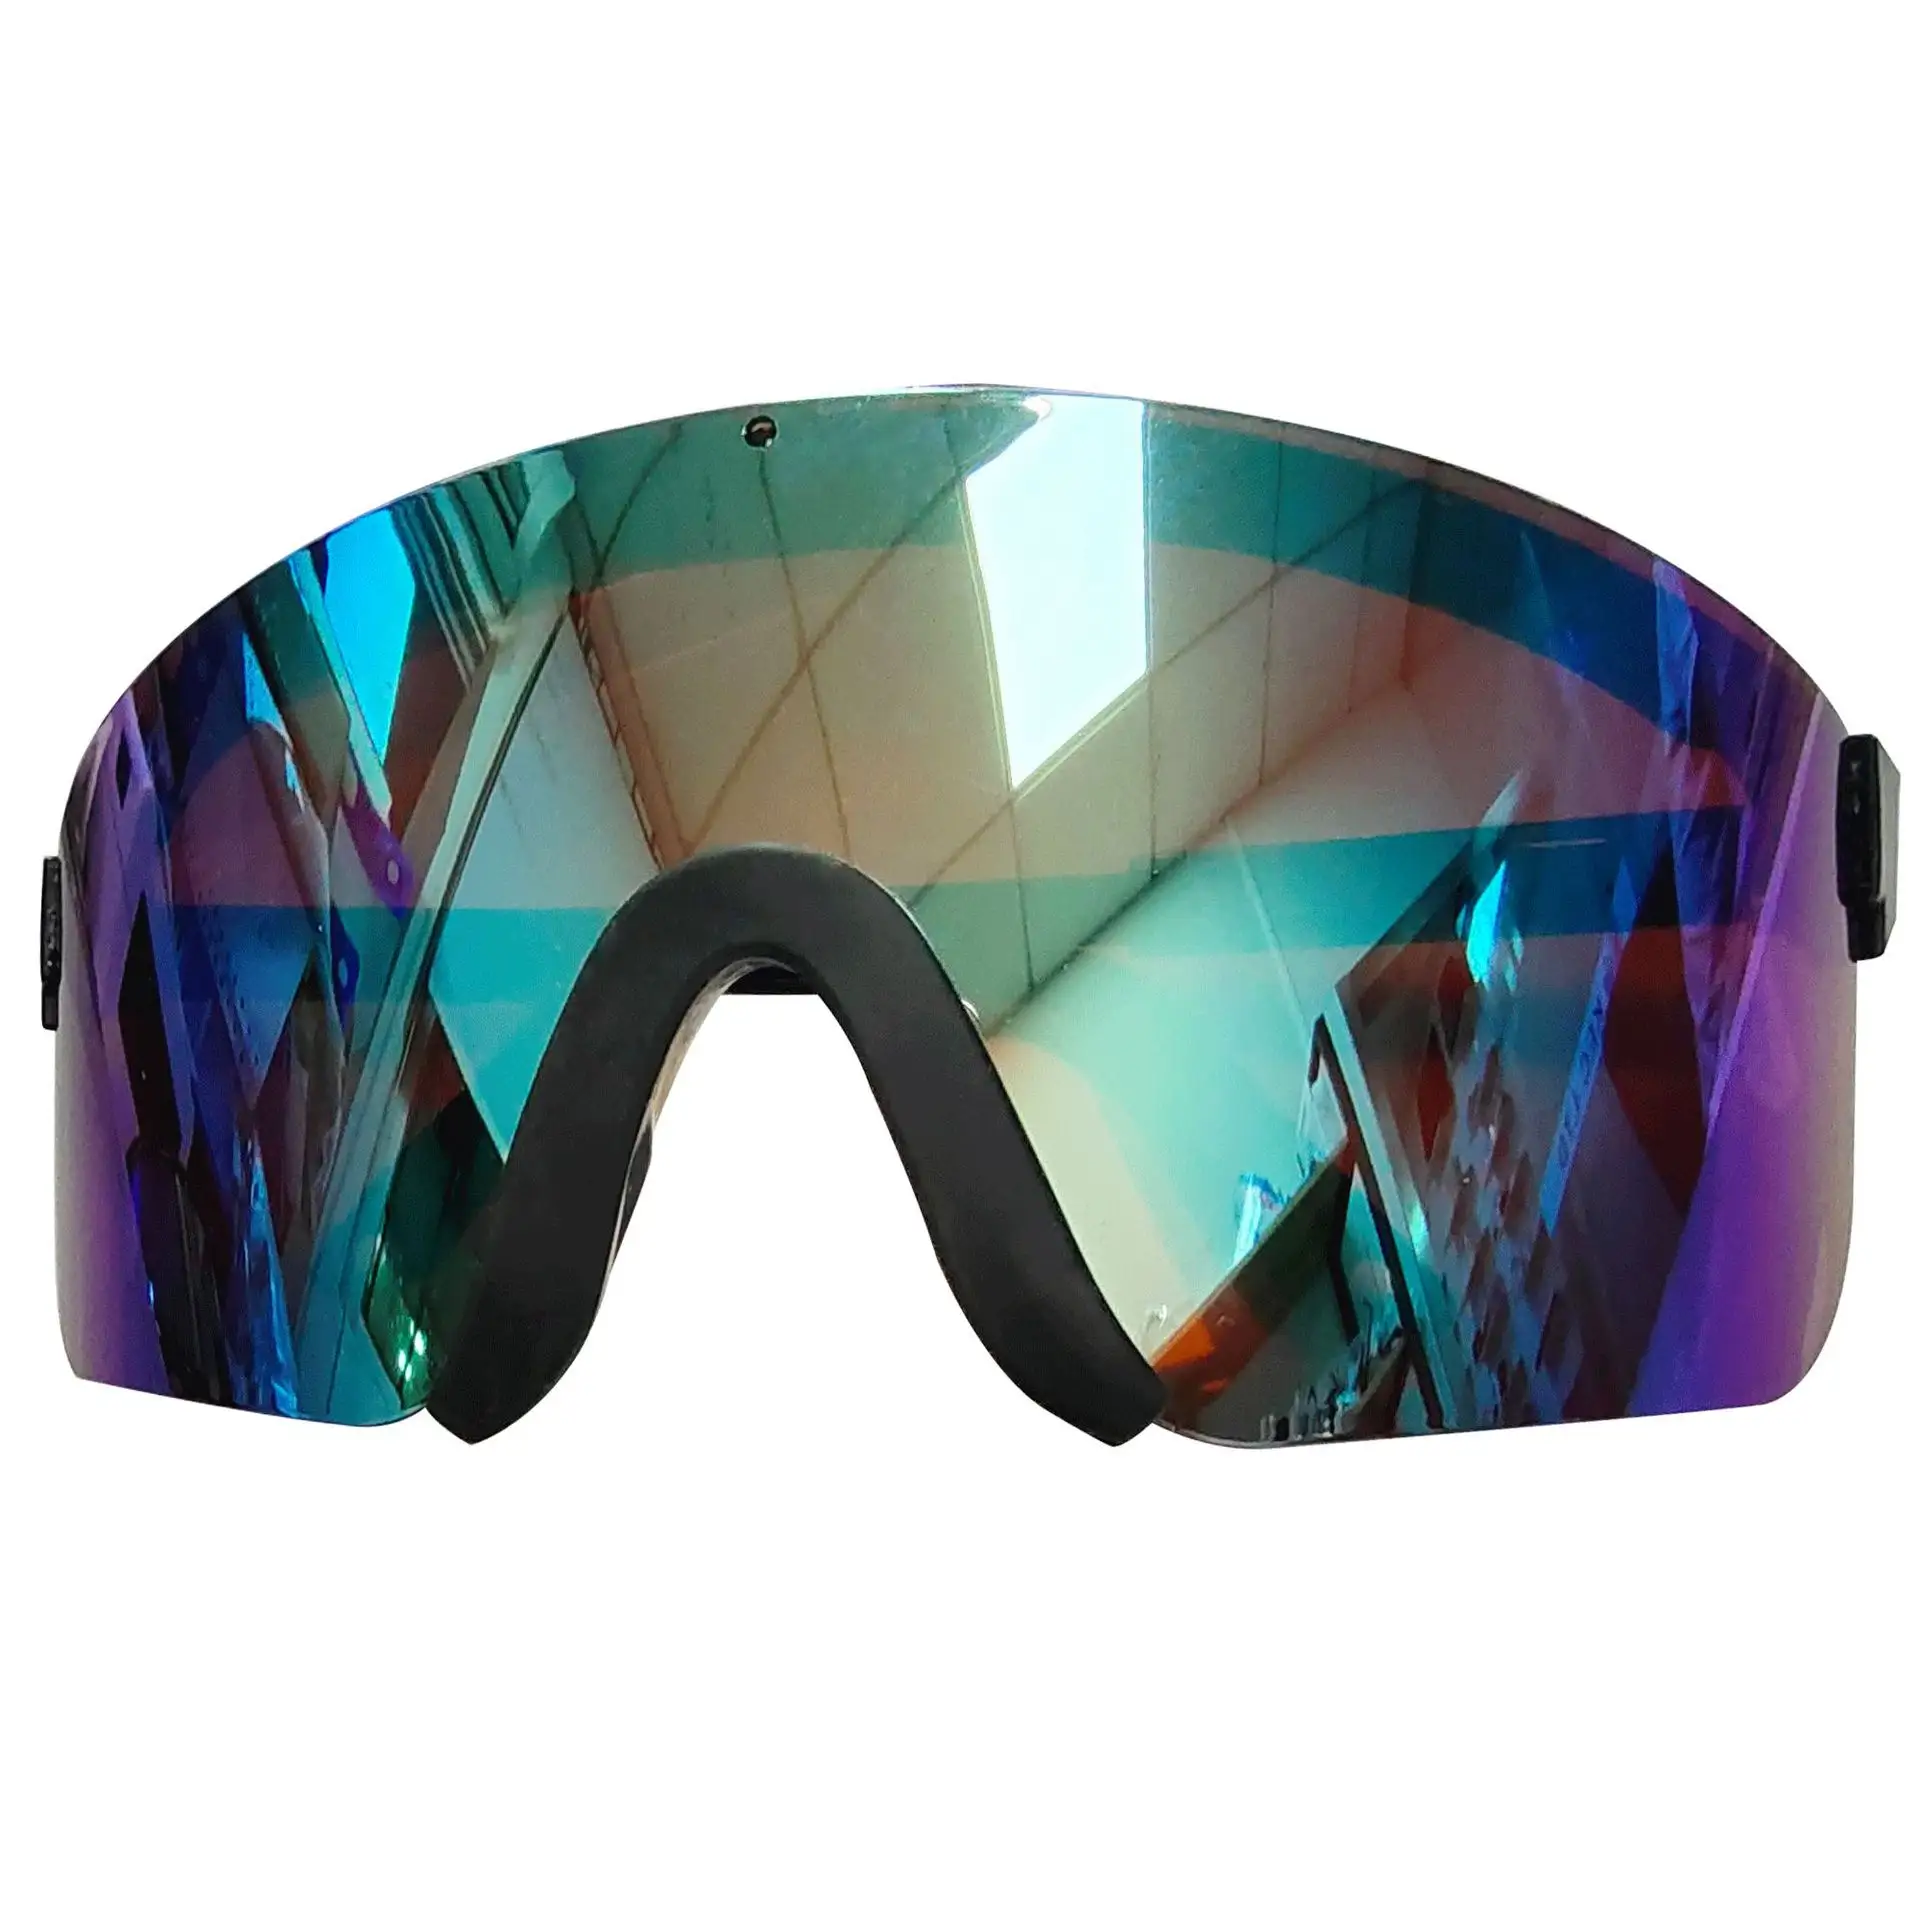 Niceseem Sunglasses Designer UV400 Oversized Bicycle Glasses Men Women Outdoor Sports Goggles Sunglasses